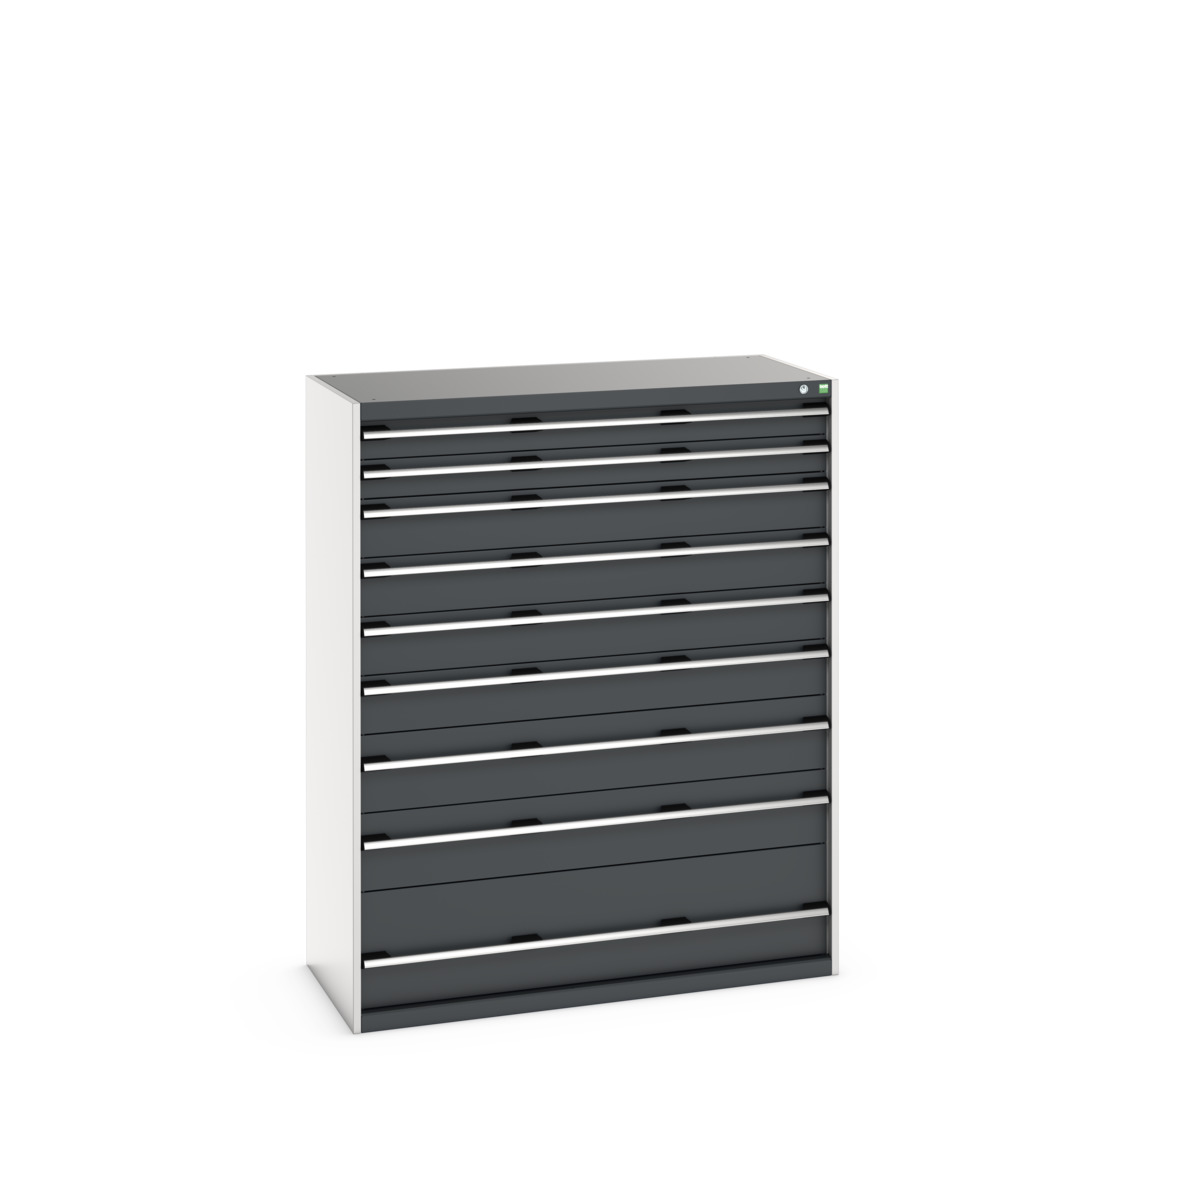 40022134. - cubio drawer cabinet